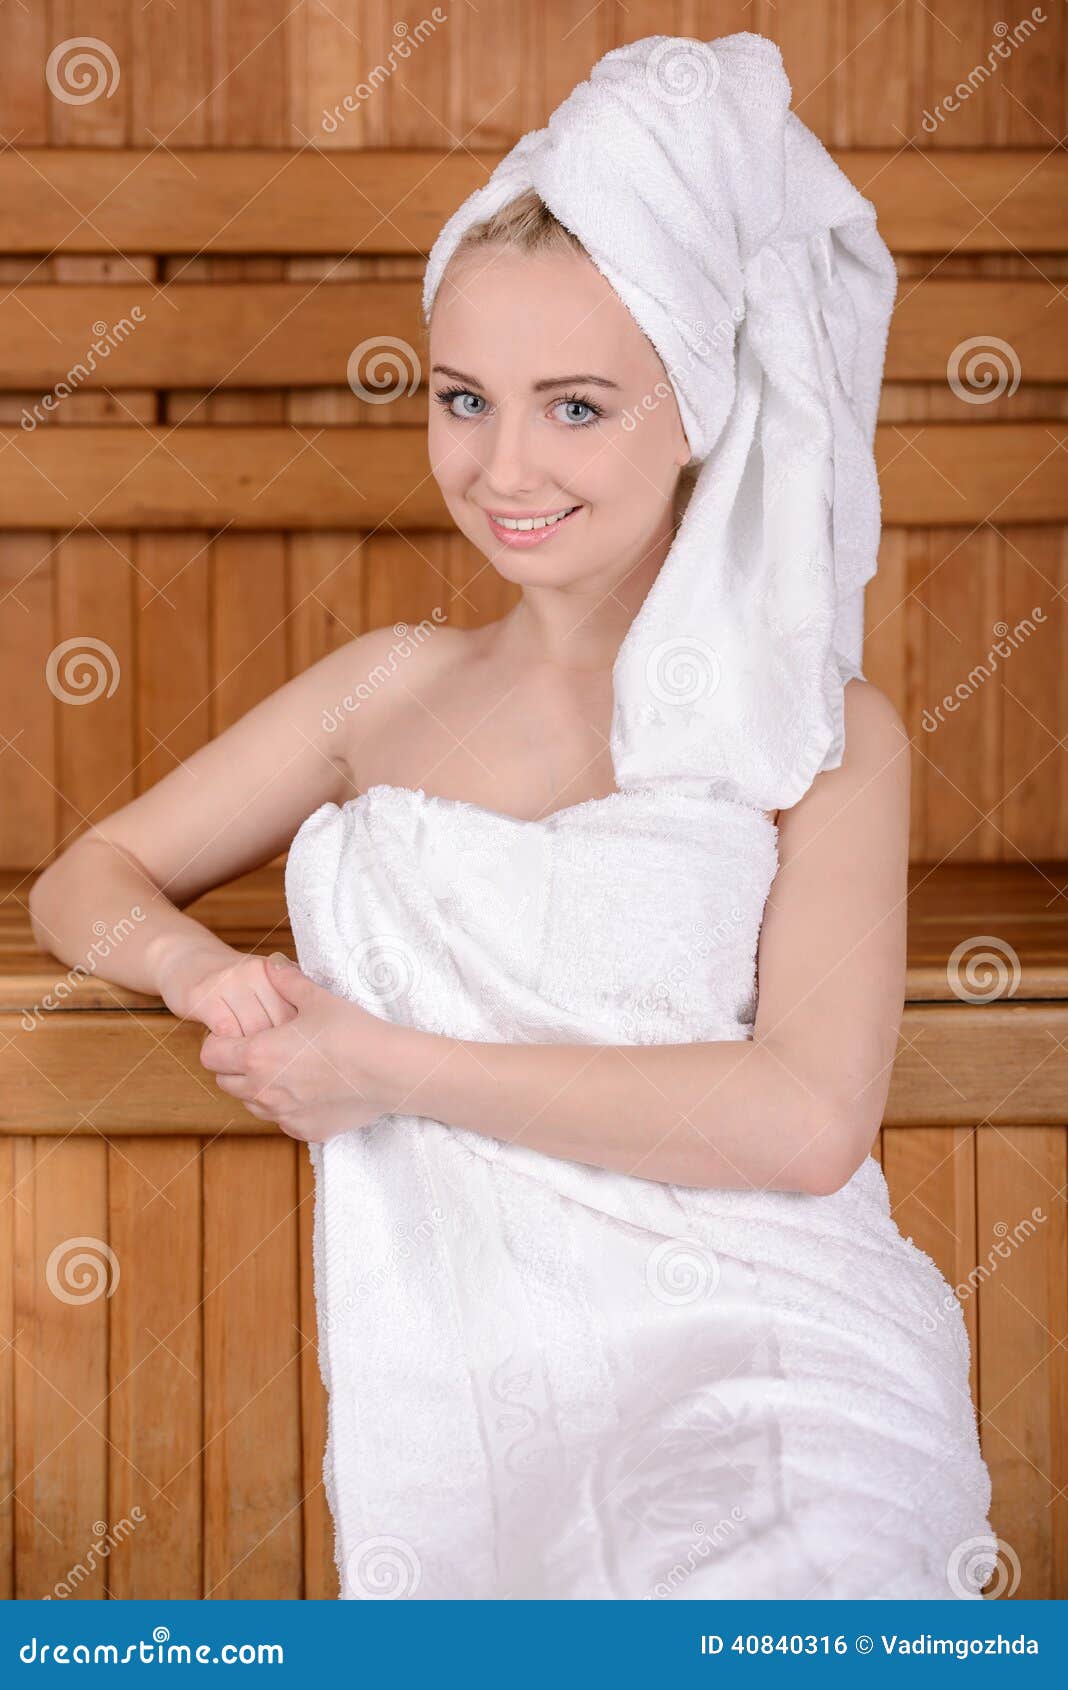 Обернутая полотенцем. Девушка в полотенце. Девушка в одном полотенце. Девушка завернутая в полотенце. Девушка в бане в полотенце.